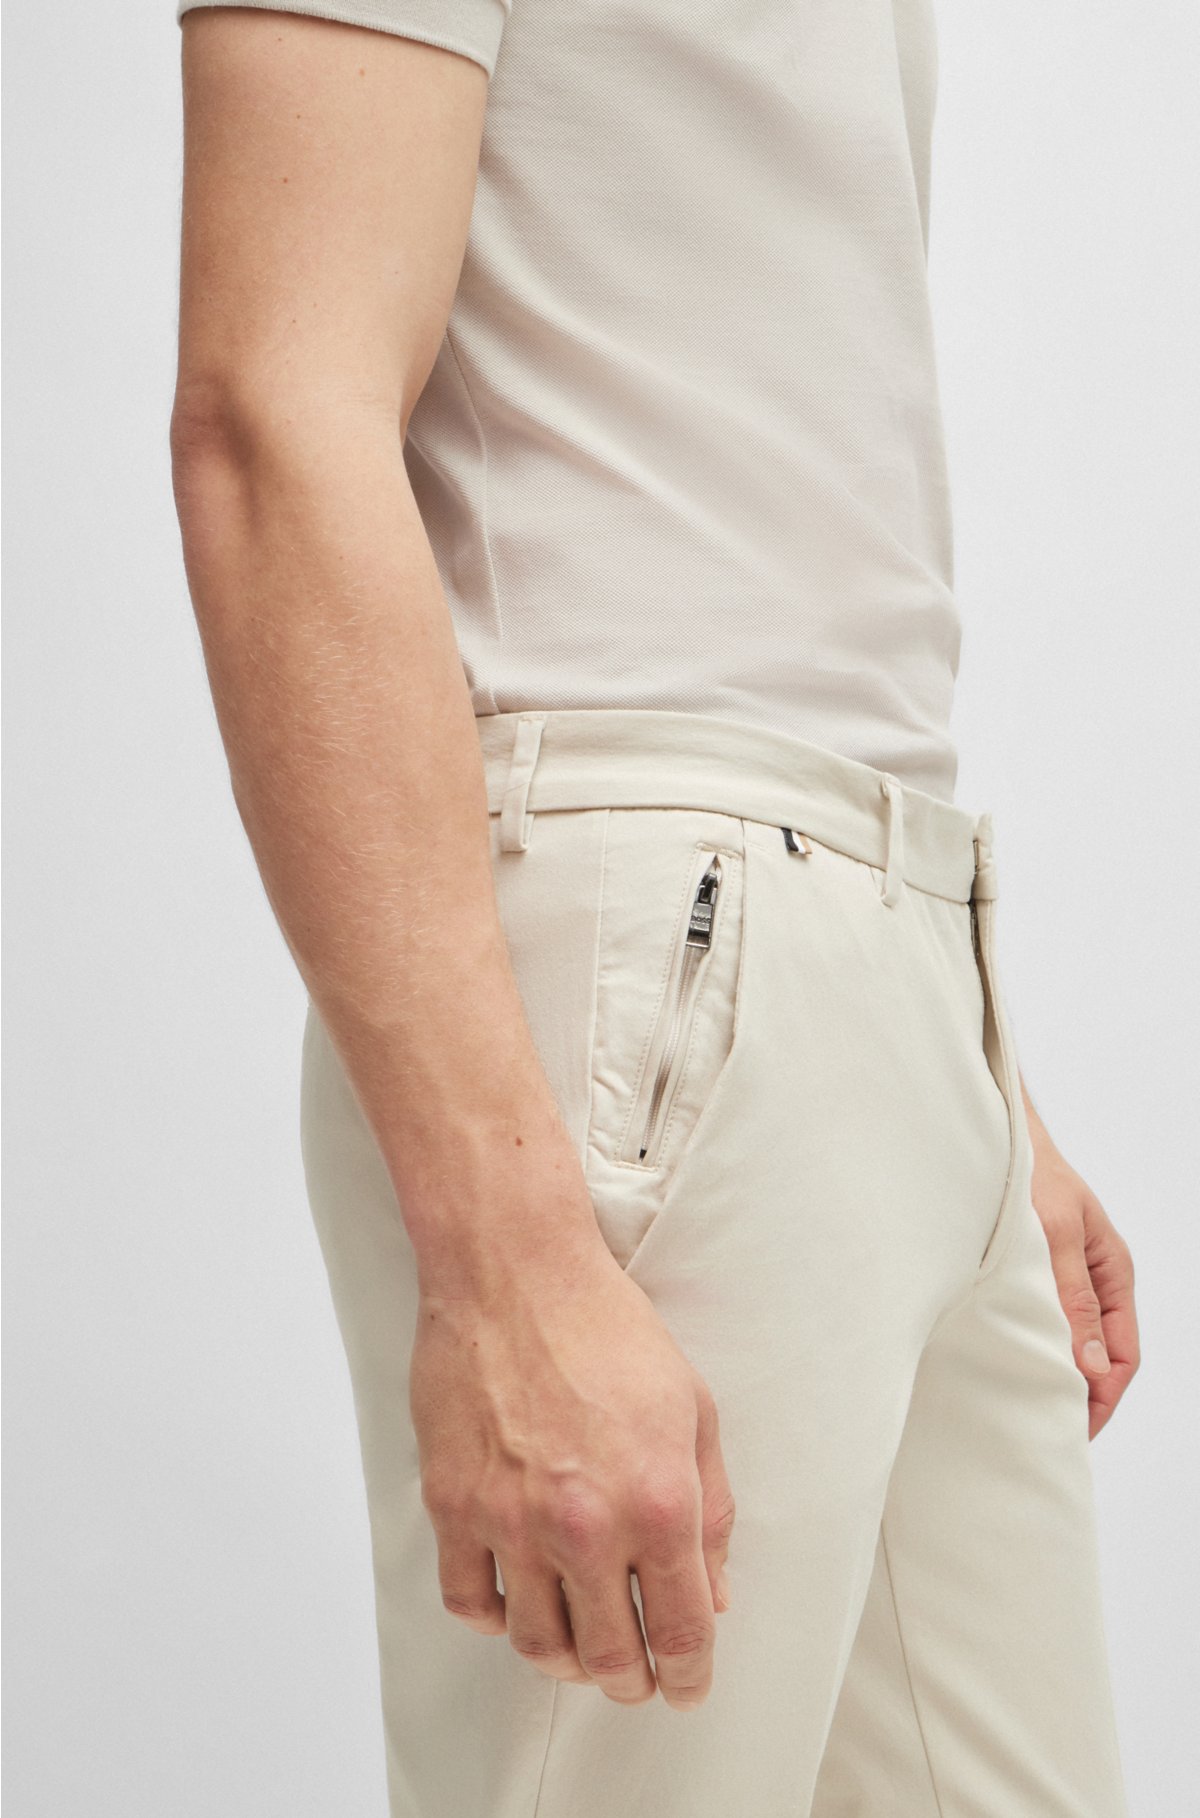 Hugo Boss Genesis Slim Fit Cotton Dress Pants 40r White, $245